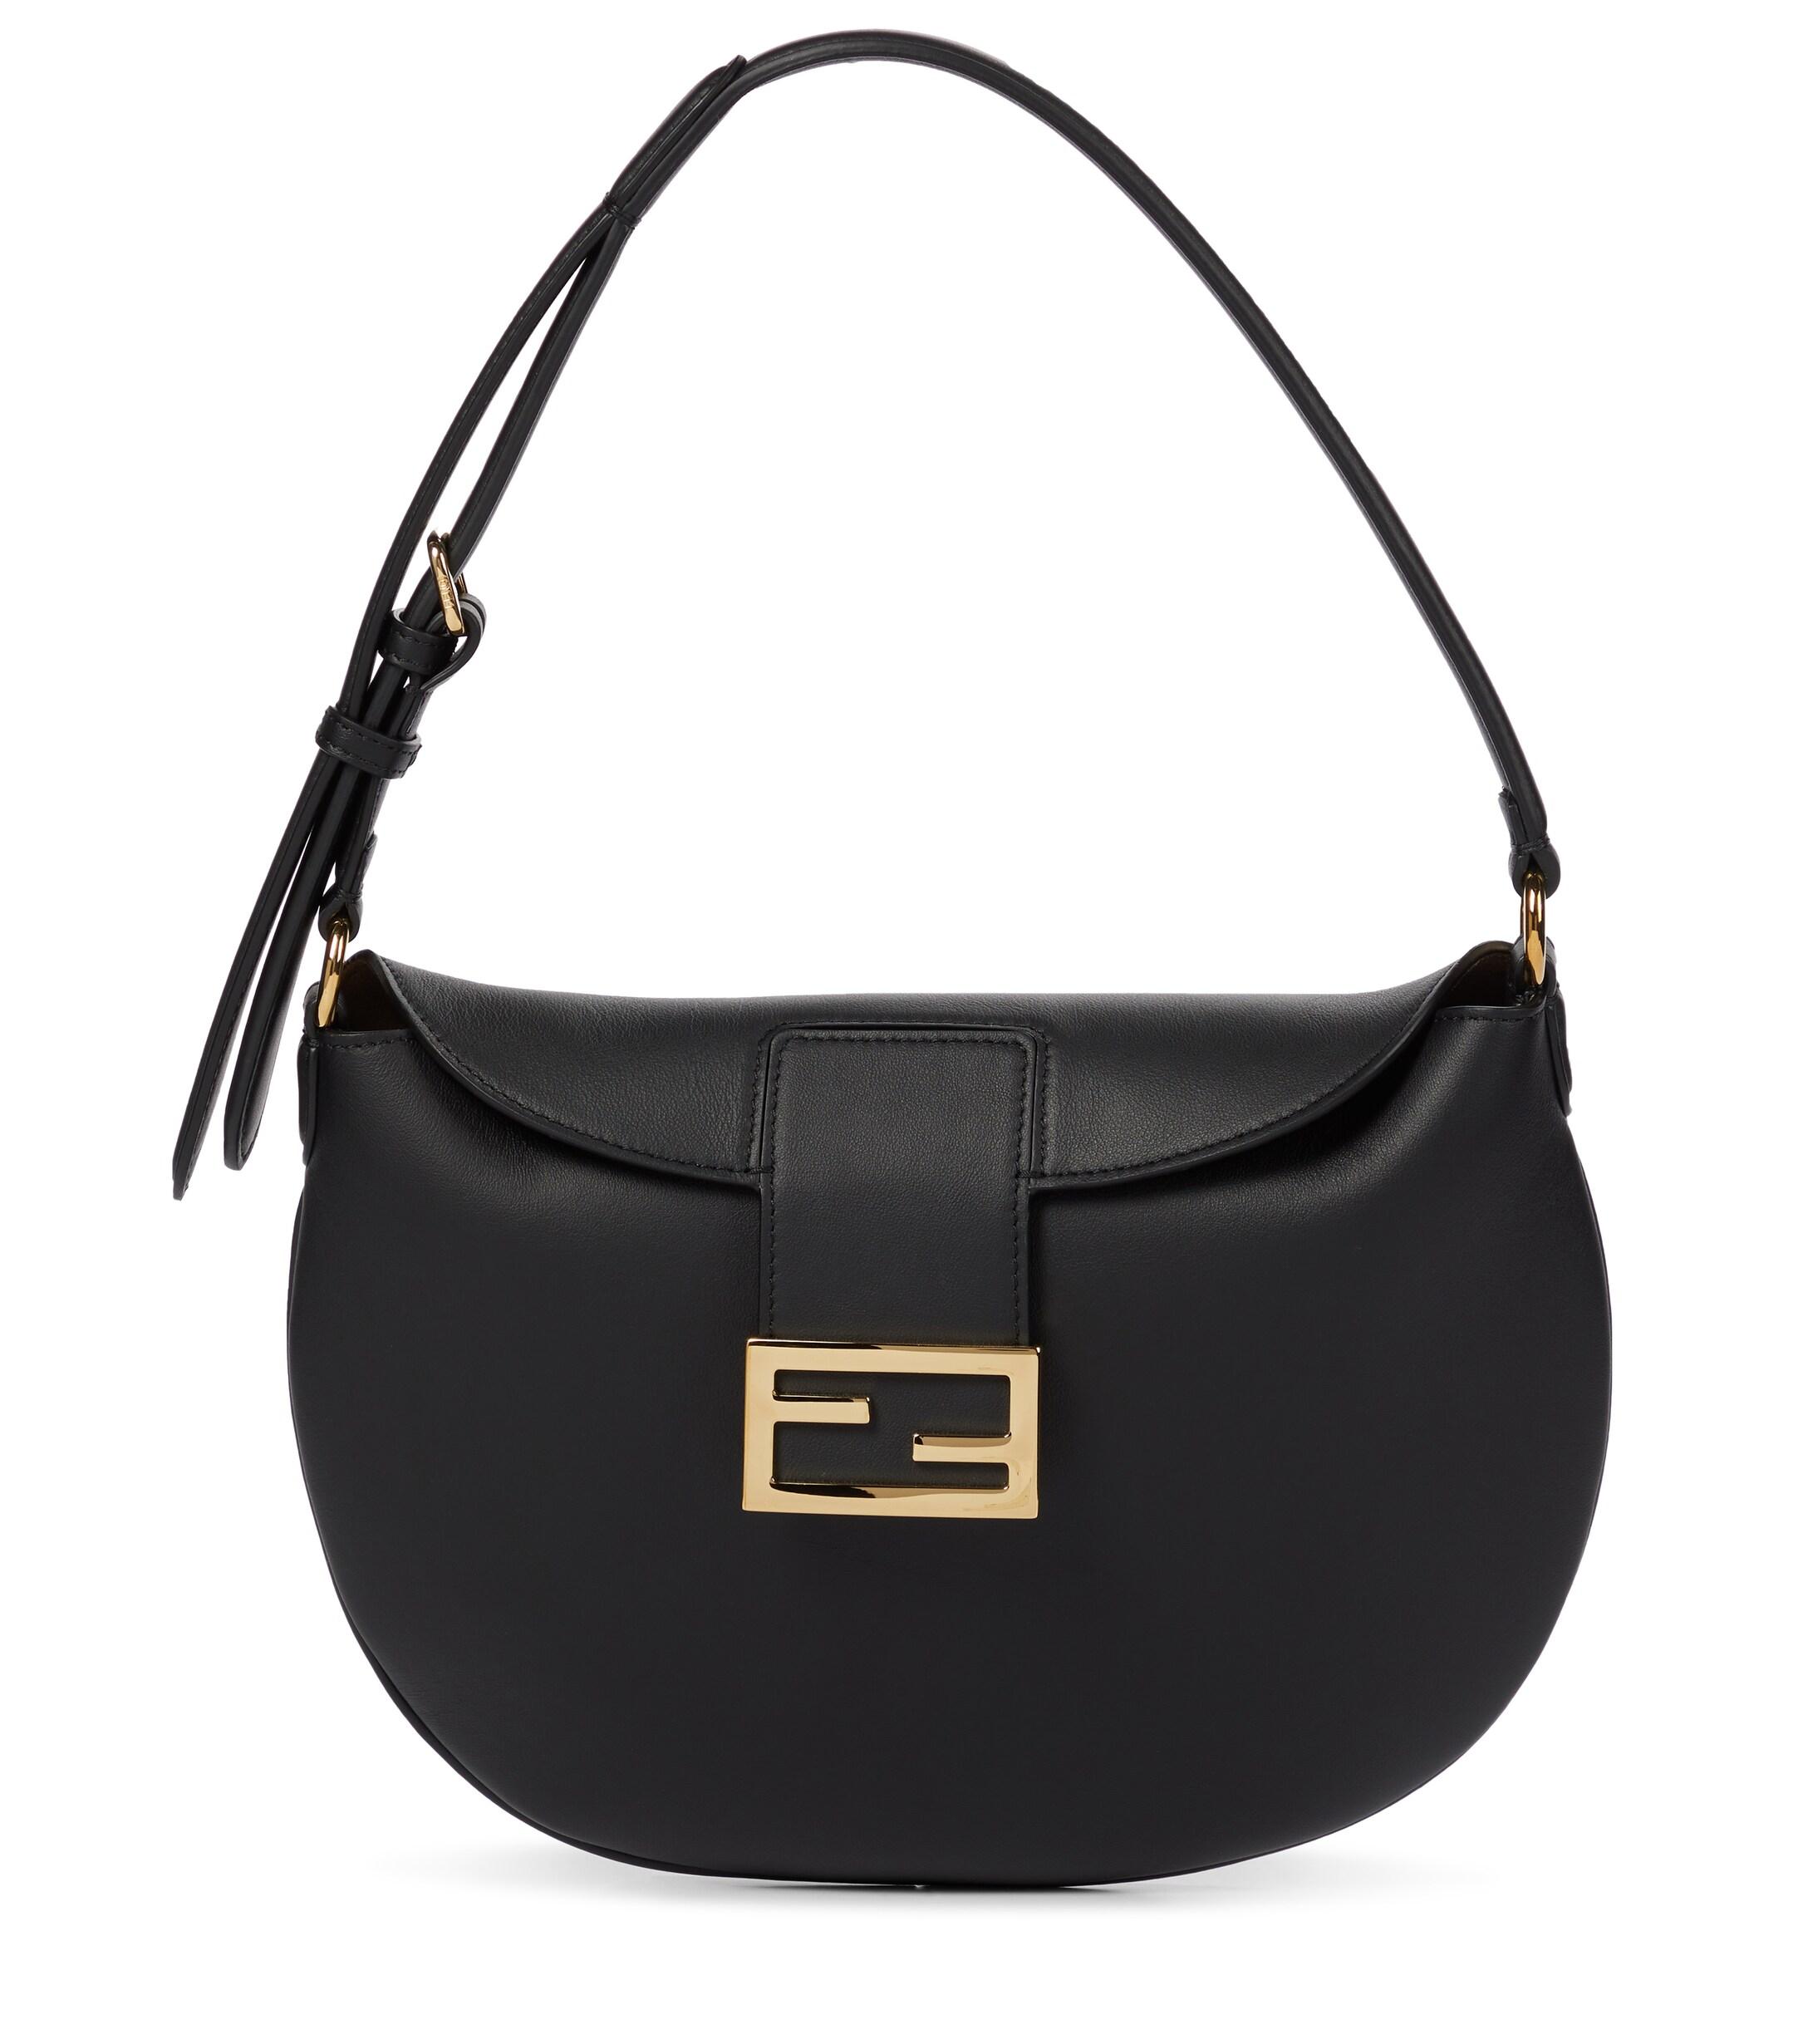 Fendi Straw Purse, Shoulder Bag. Black with Gold Studs | eBay